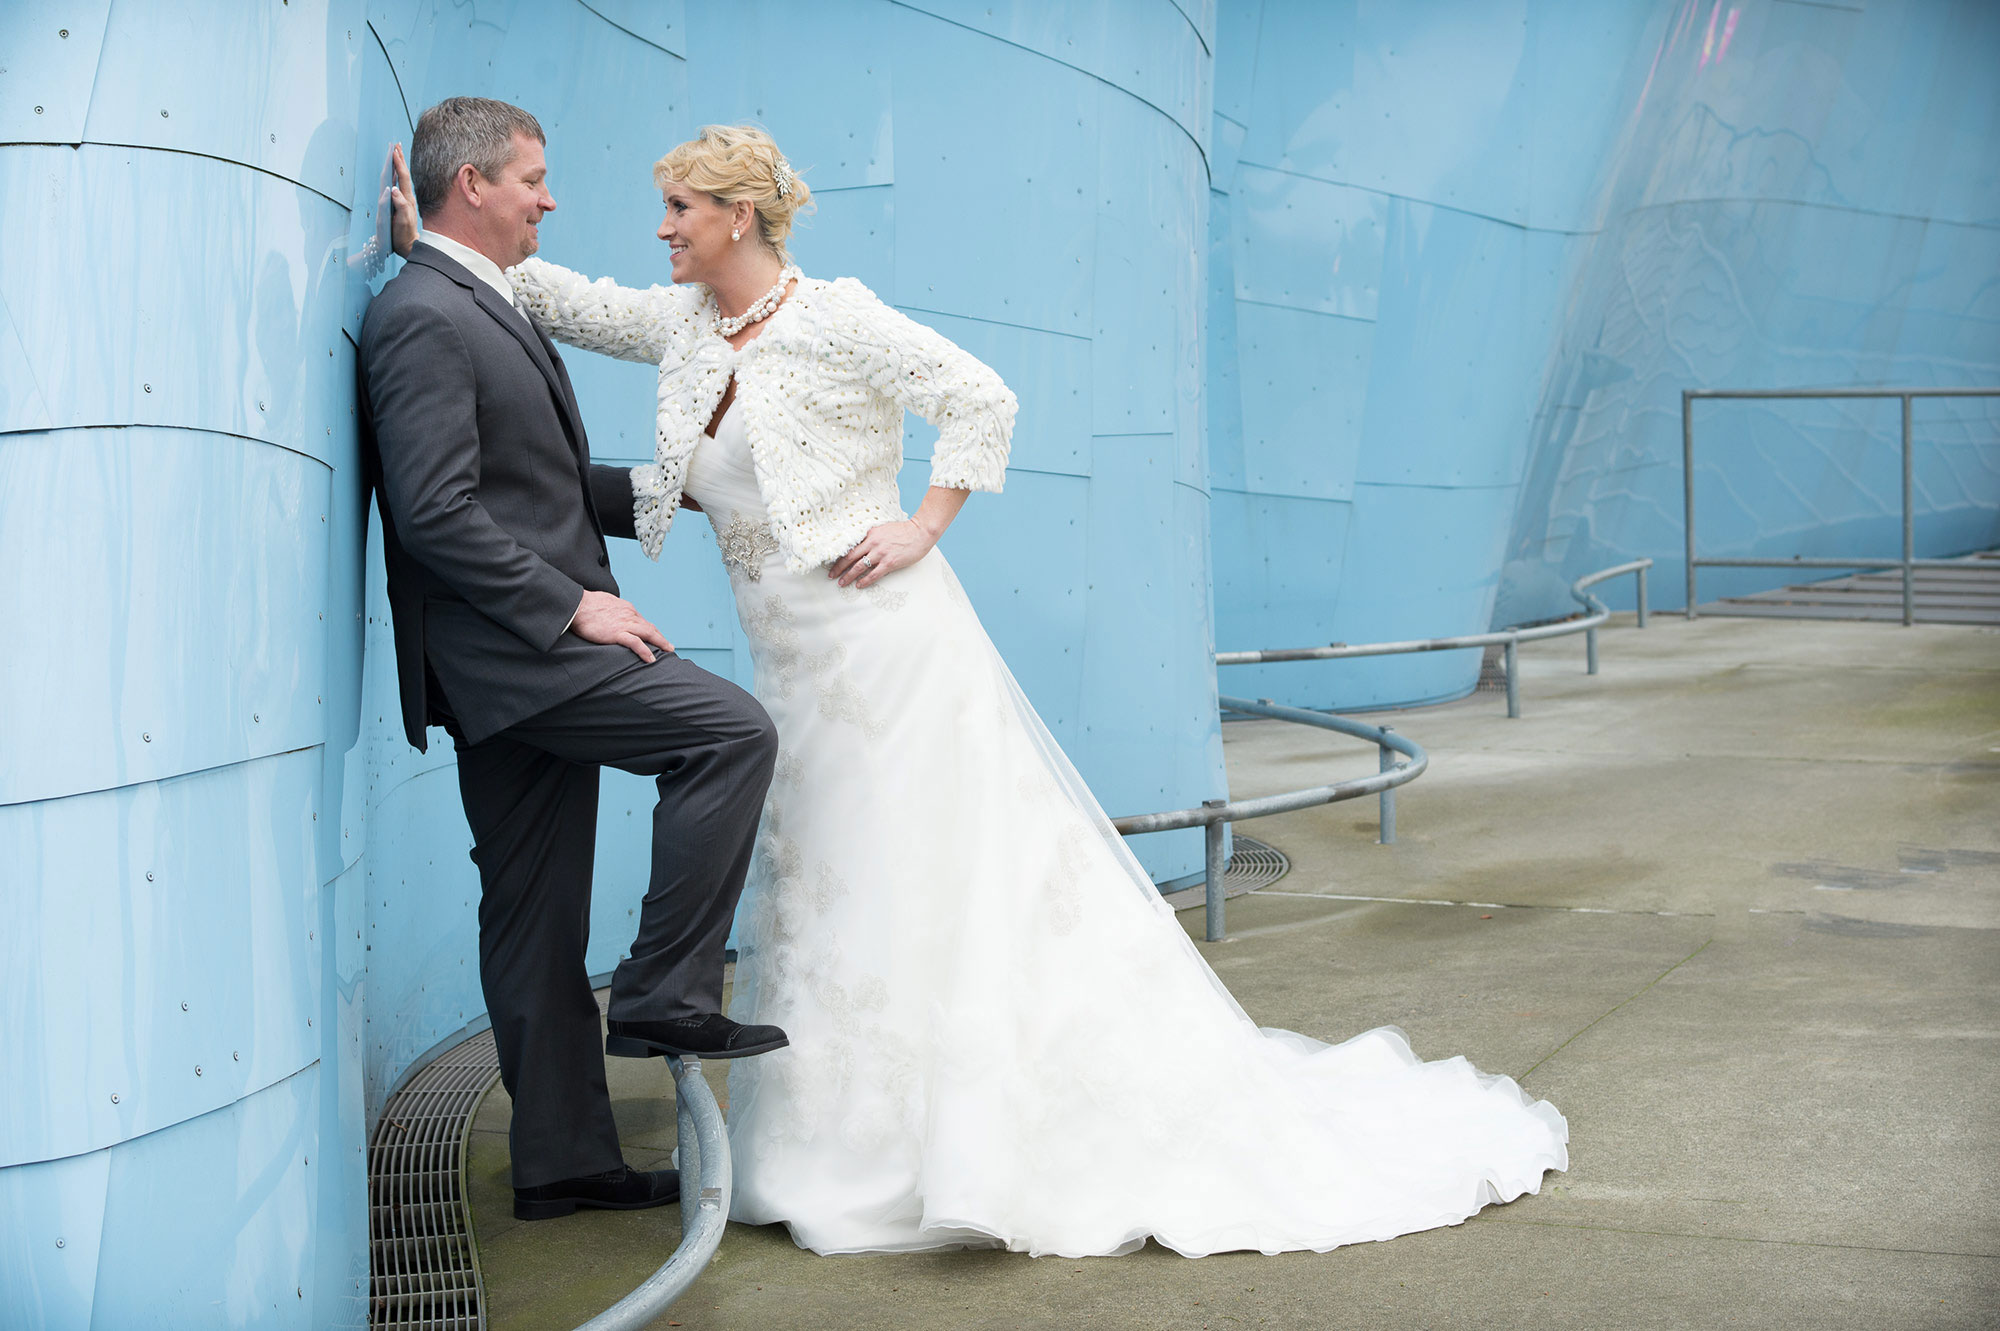 Seattle wedding photographer, Anita Nowacka. 